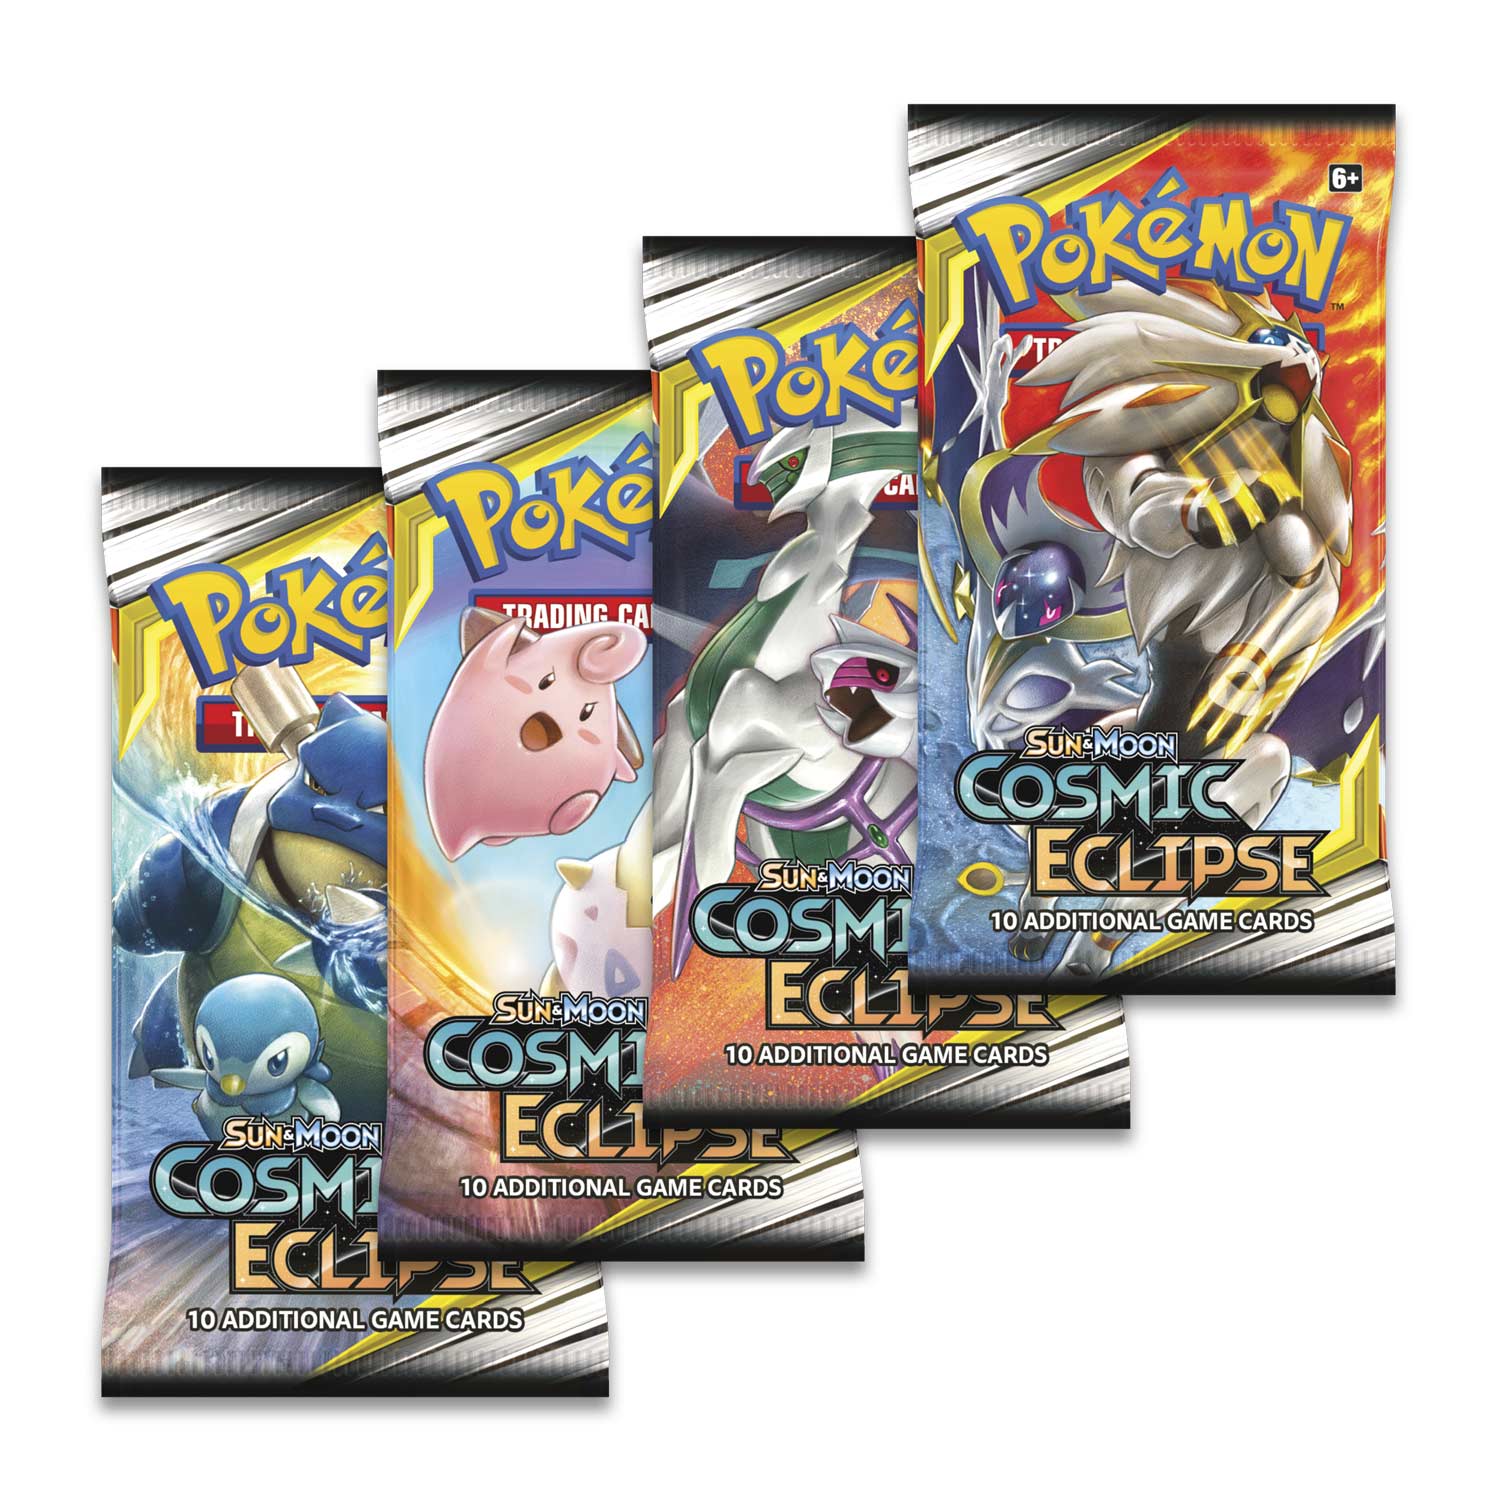 Pokémon TCG: Sun & Moon Cosmic Eclipse Booster Pack